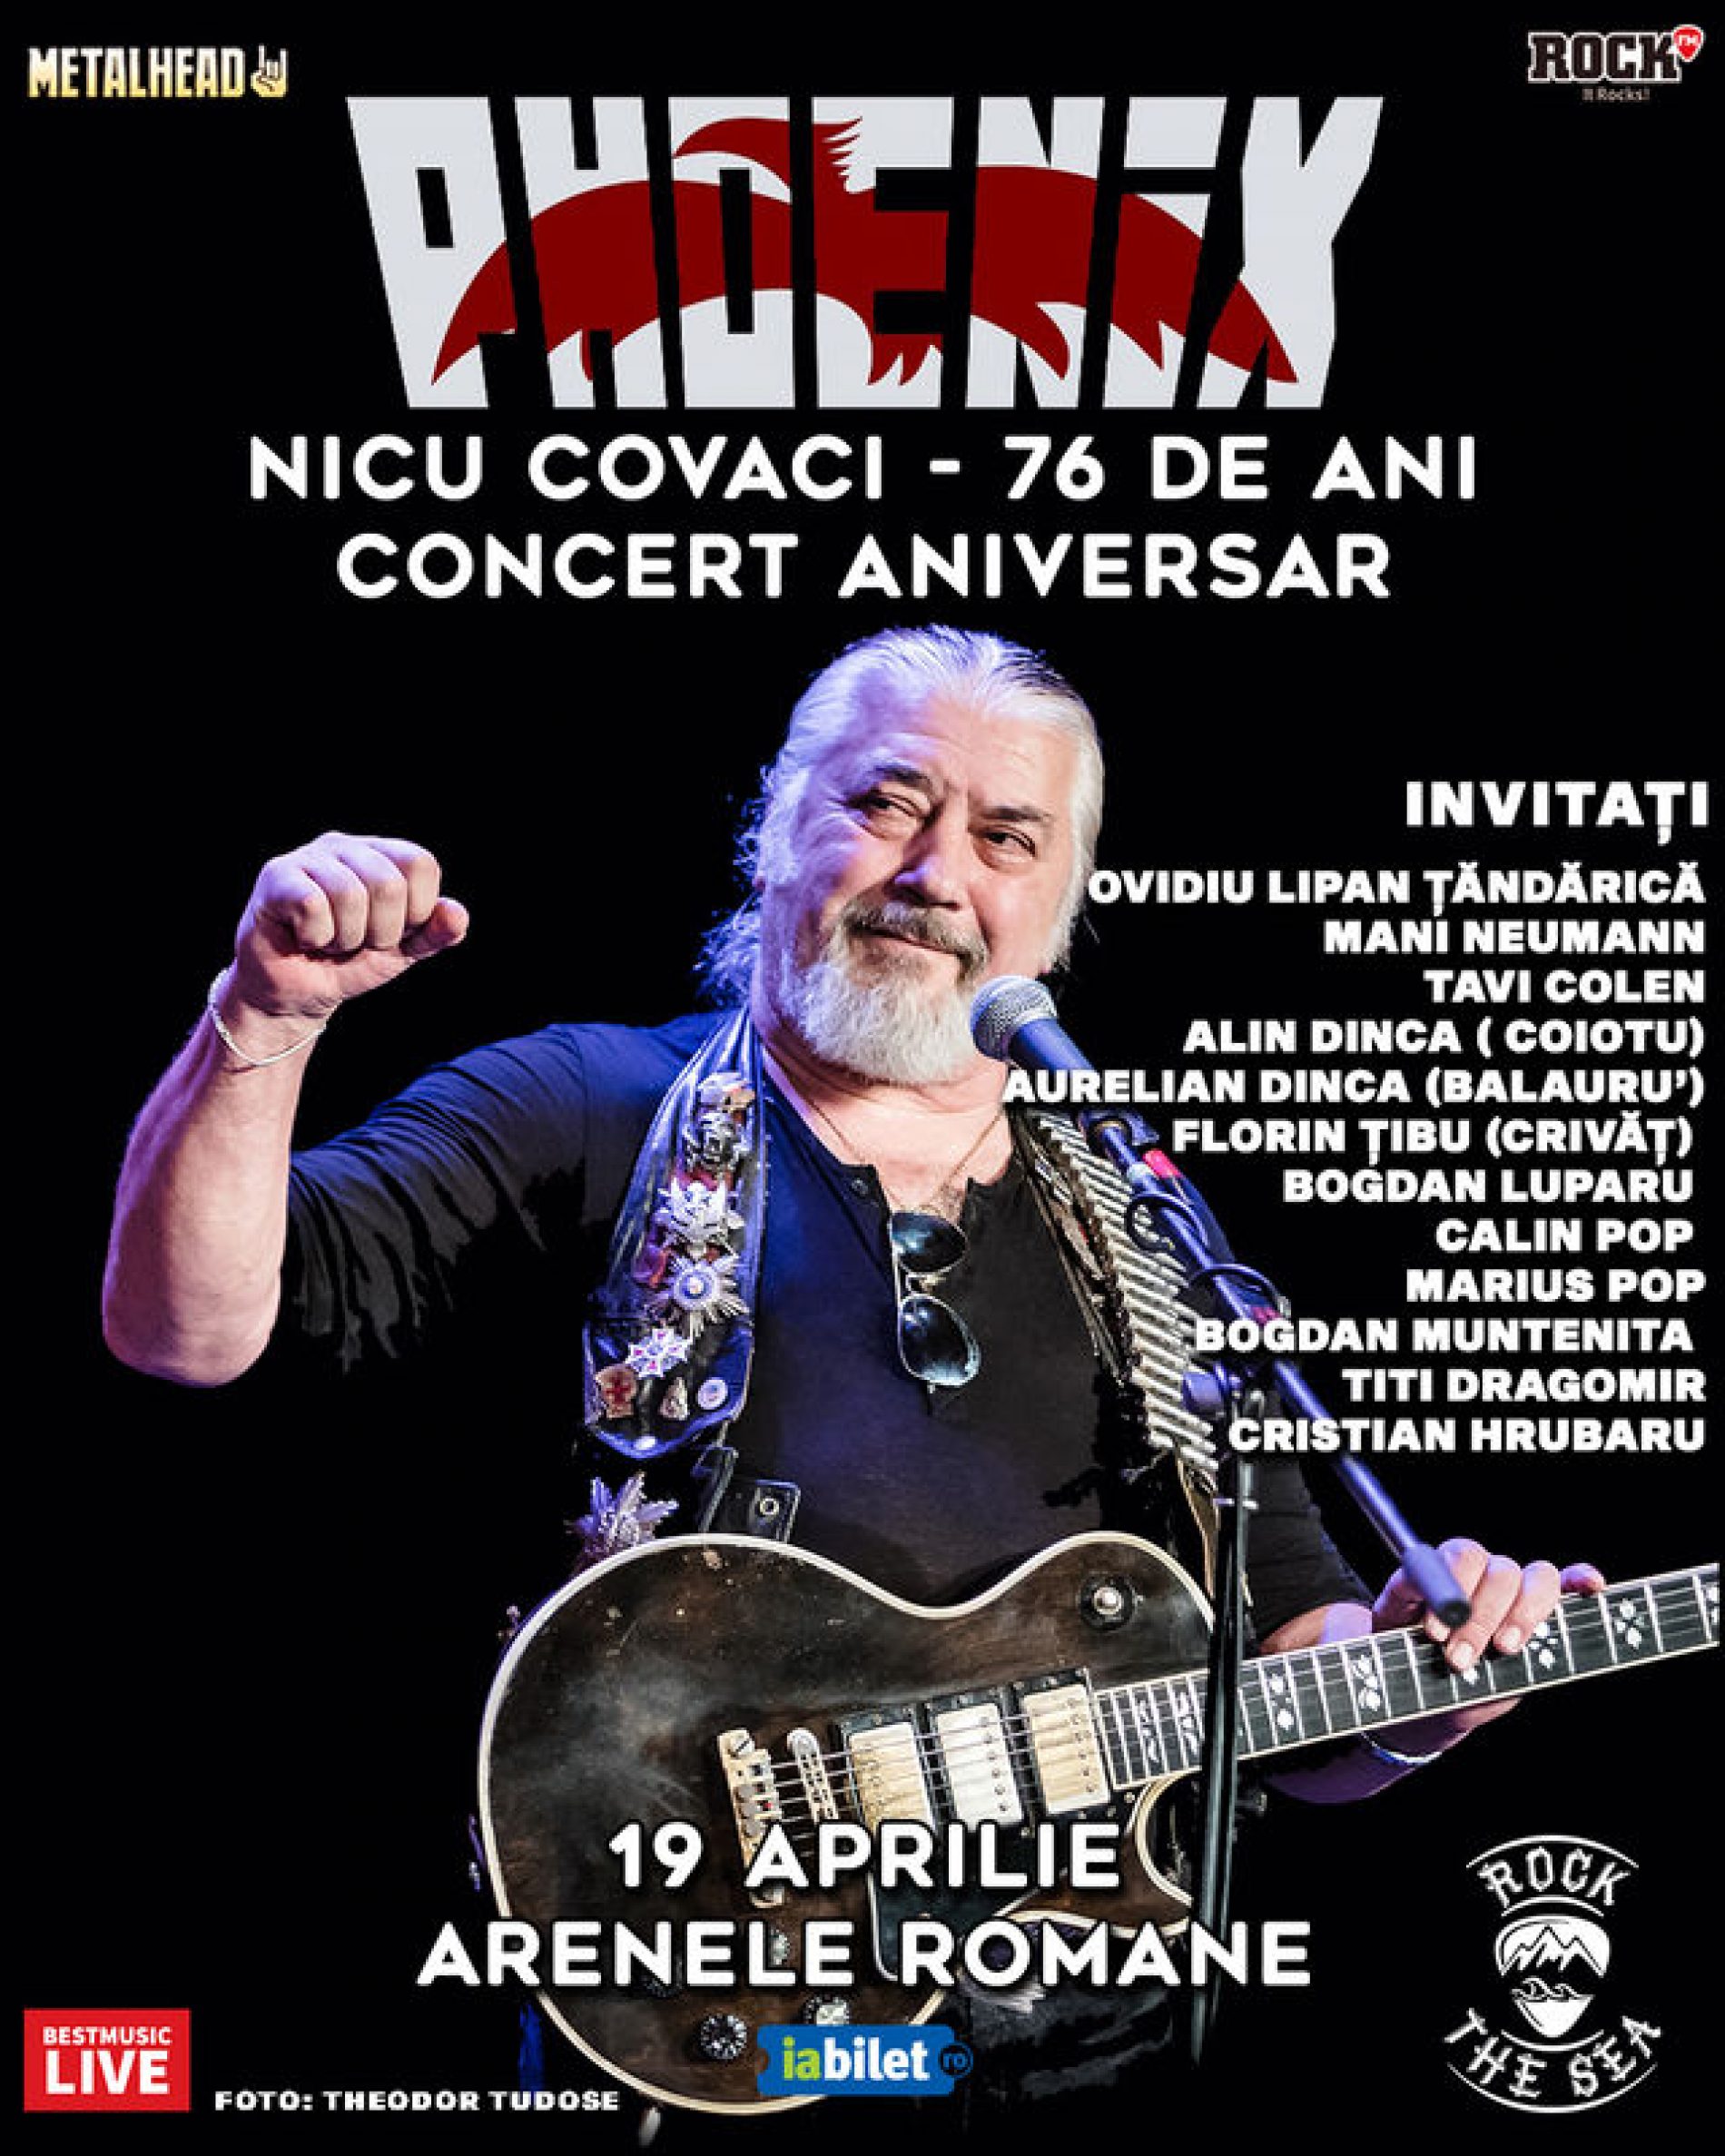 Concert aniversar Phoenix „Nicu Covaci – 76 ani” la Arenele Romane